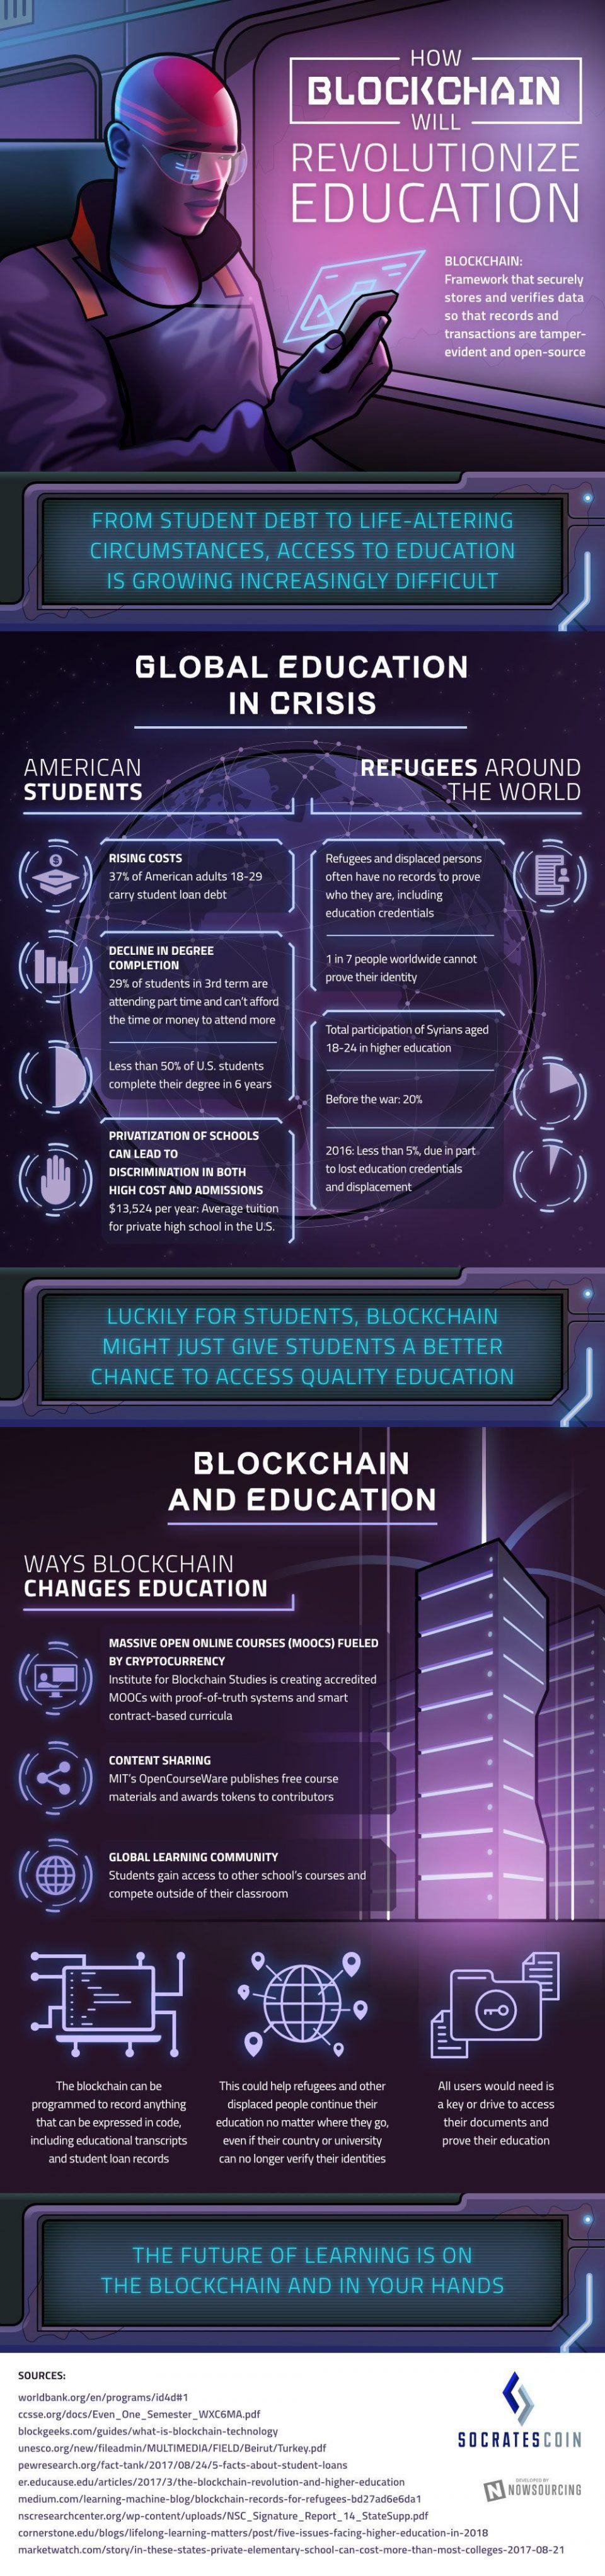 How Blockchain Could Revolutionize Education Infographic